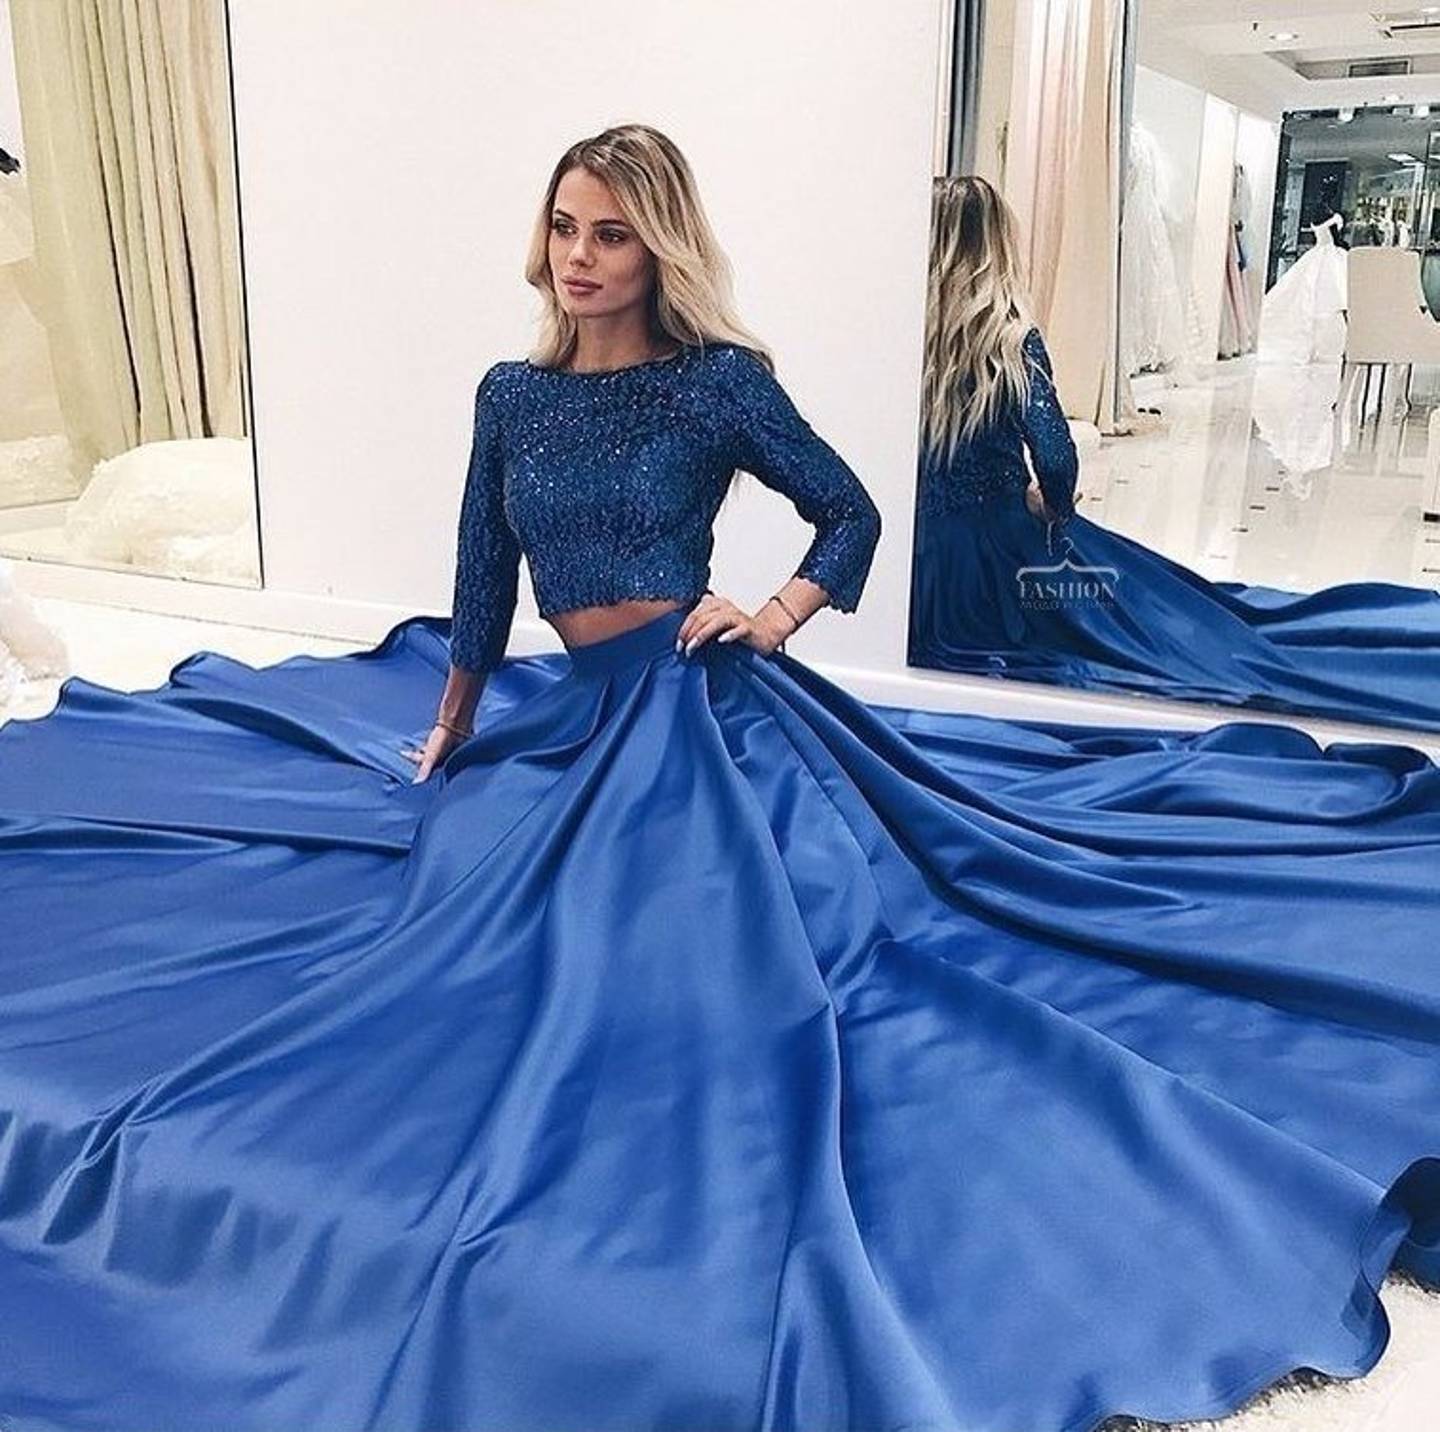 Fashion - Vestido azul